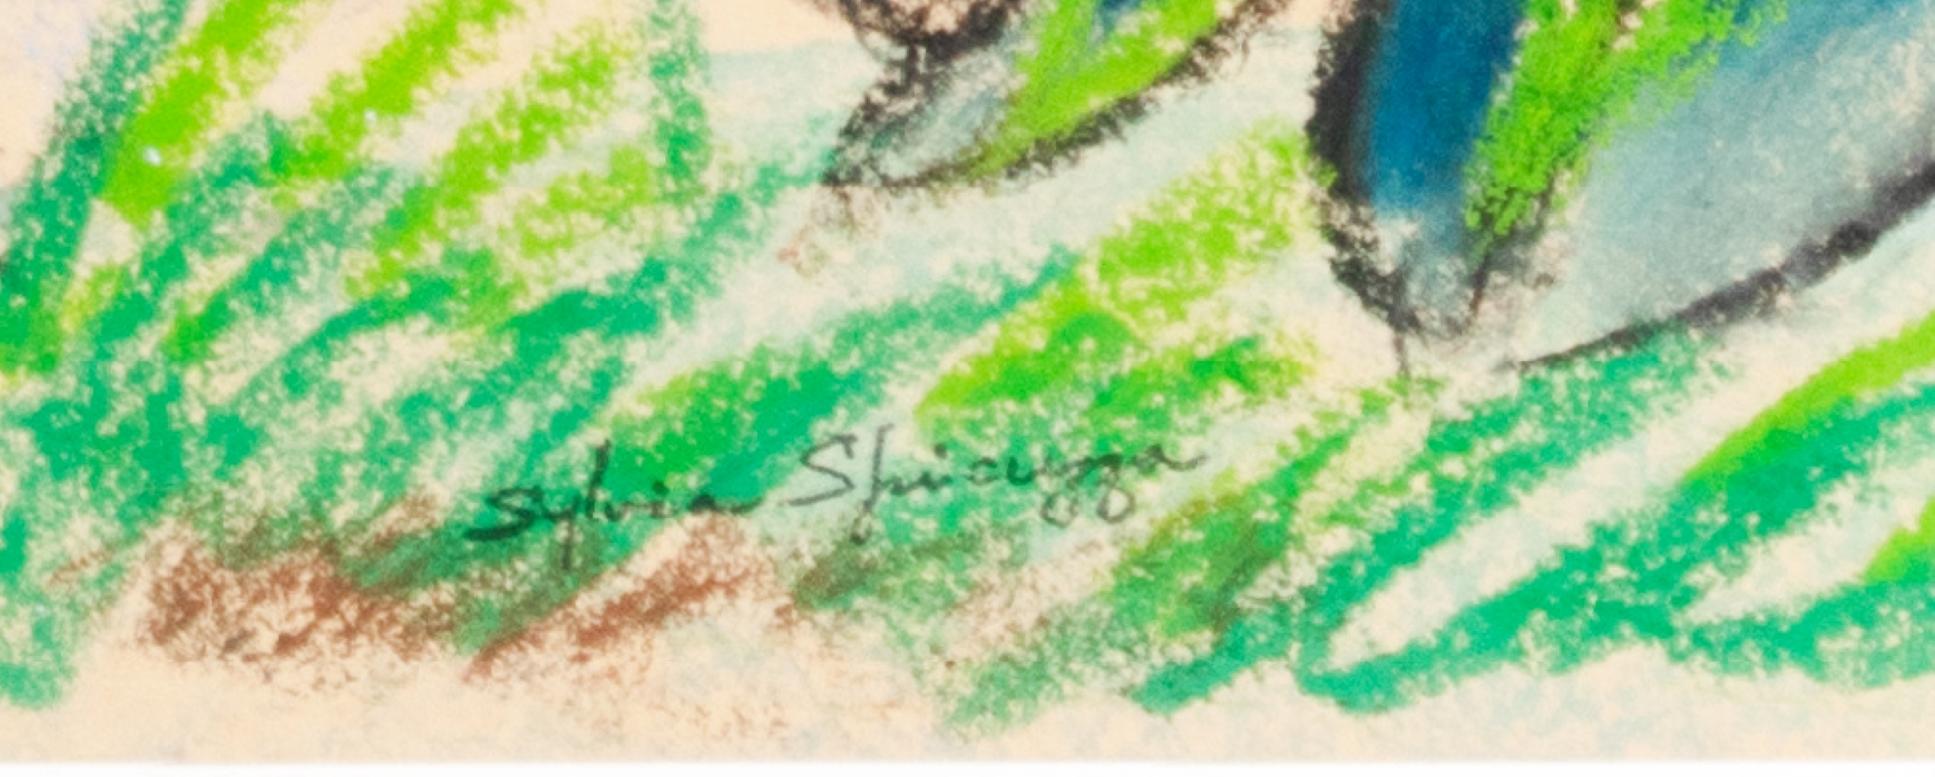 sylvia signature